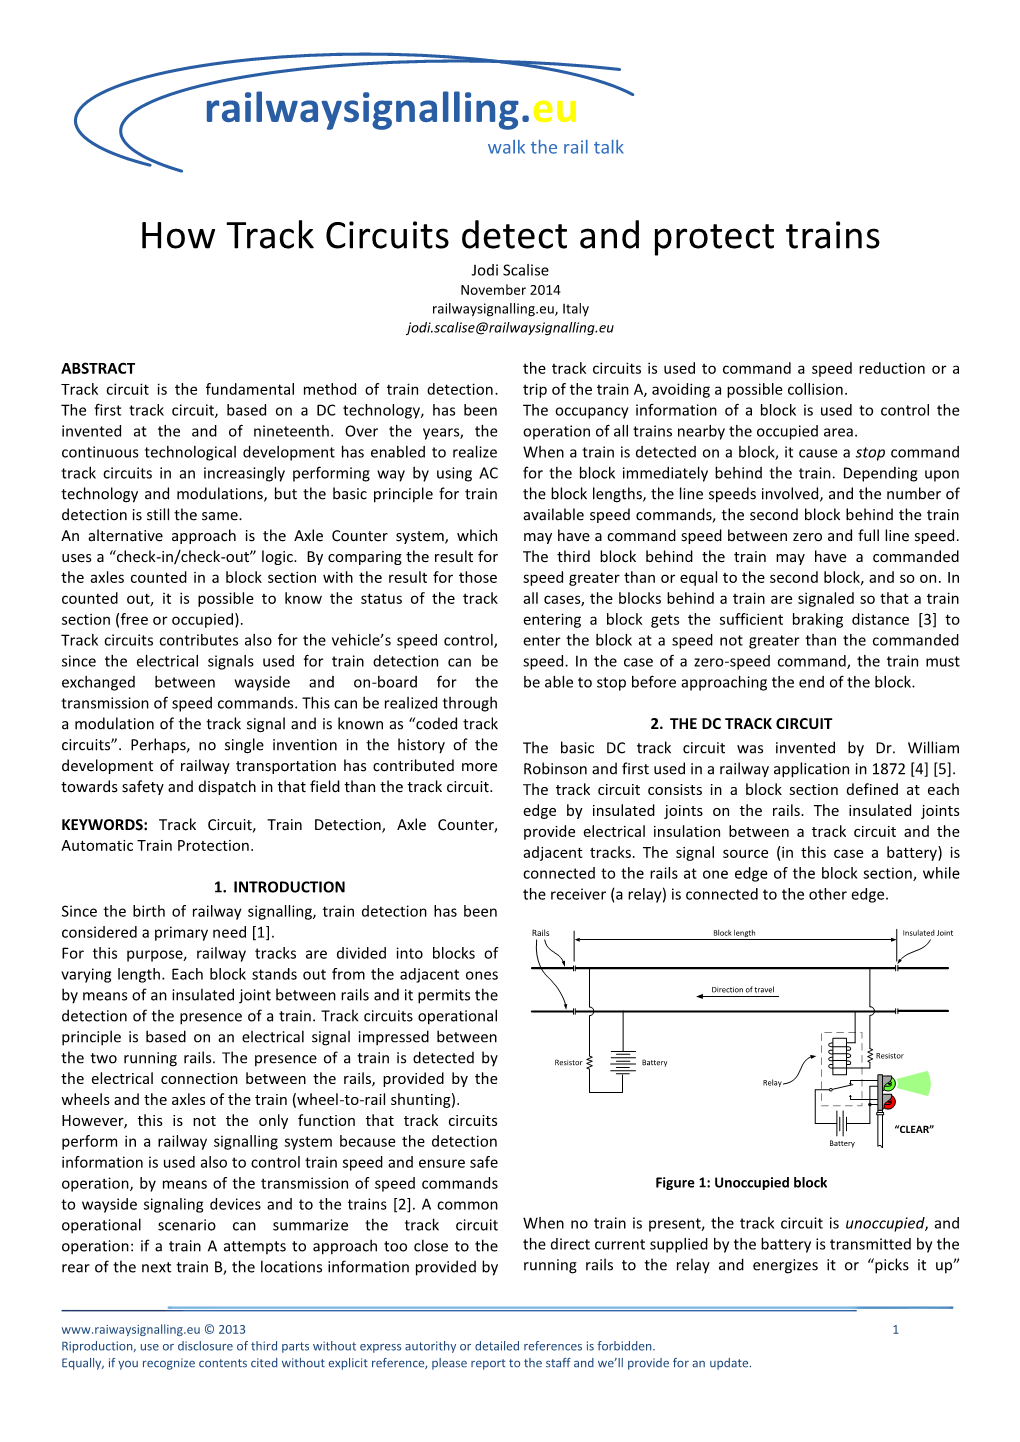 How Track Circuits Detect and Protect Trains Jodi Scalise November 2014 Railwaysignalling.Eu, Italy Jodi.Scalise@Railwaysignalling.Eu